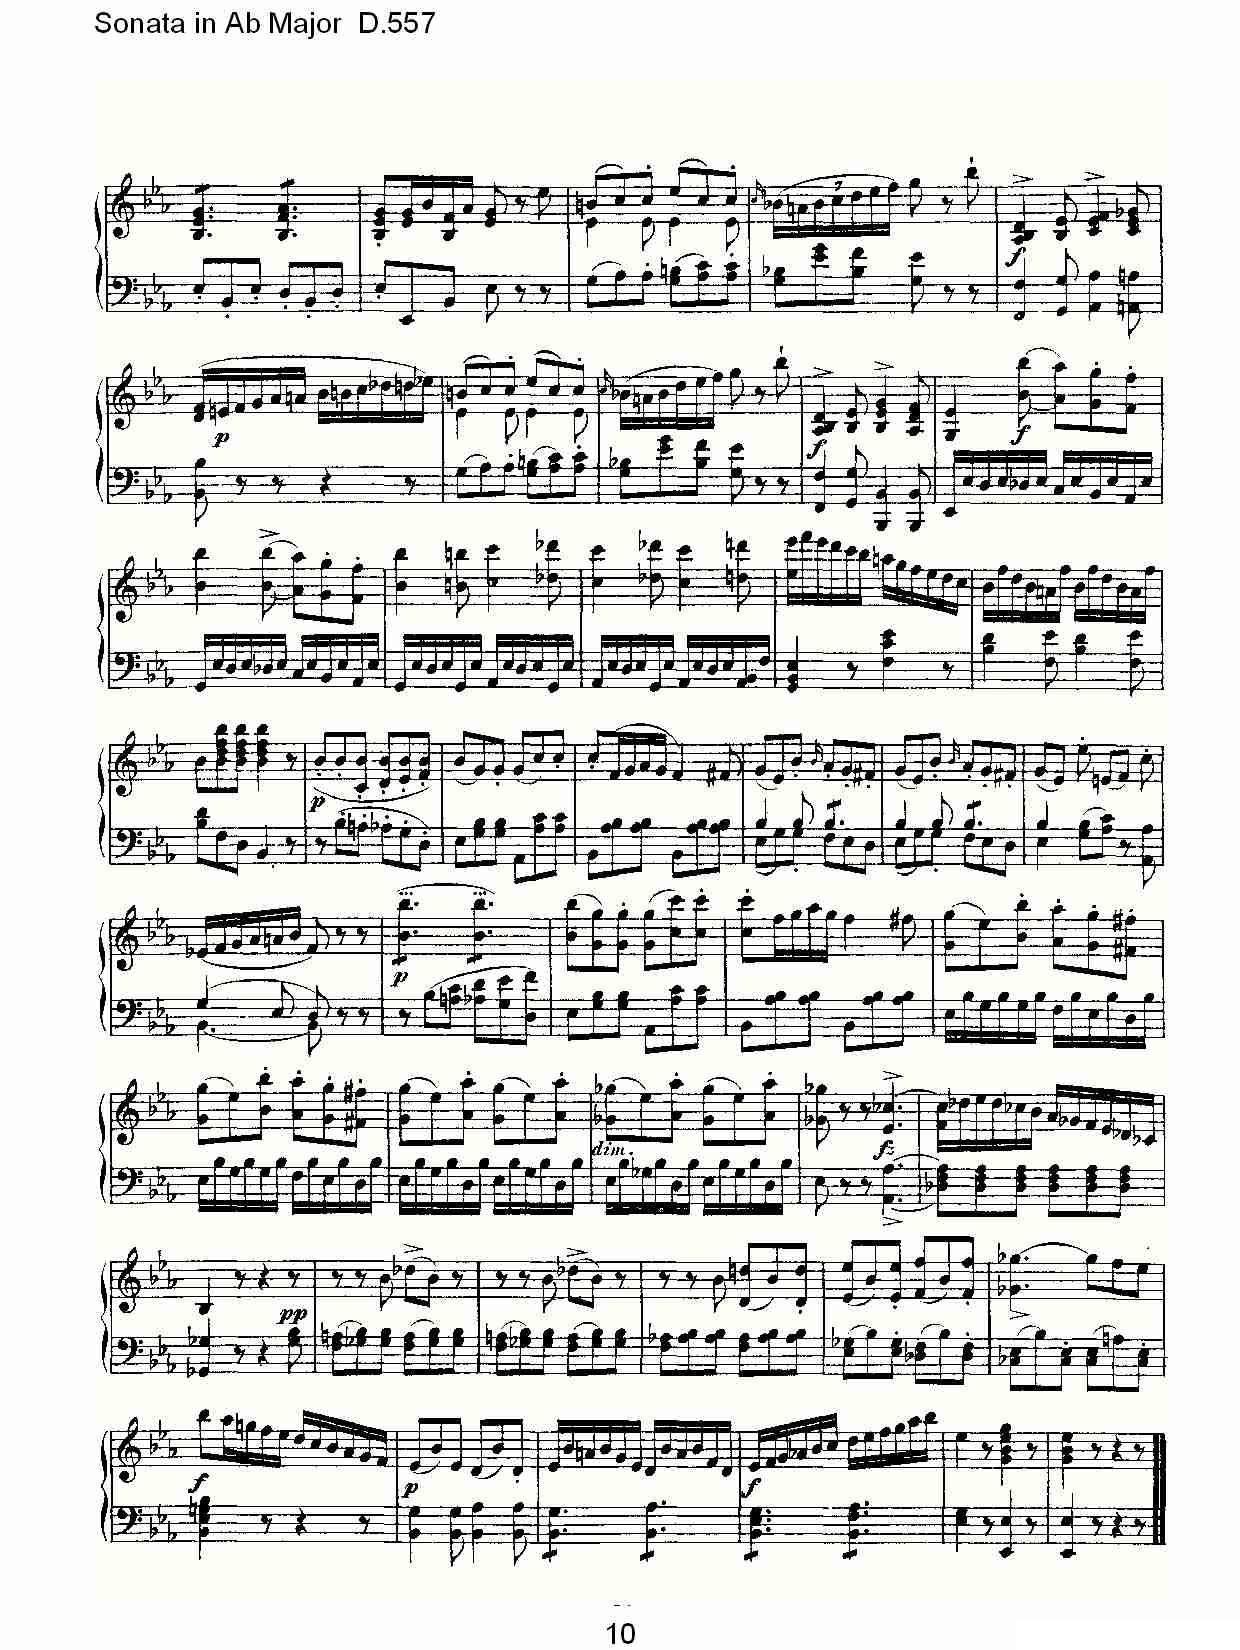 Sonata in Ab Major D.557（Ab大调奏鸣曲 D.557）钢琴曲谱（图10）